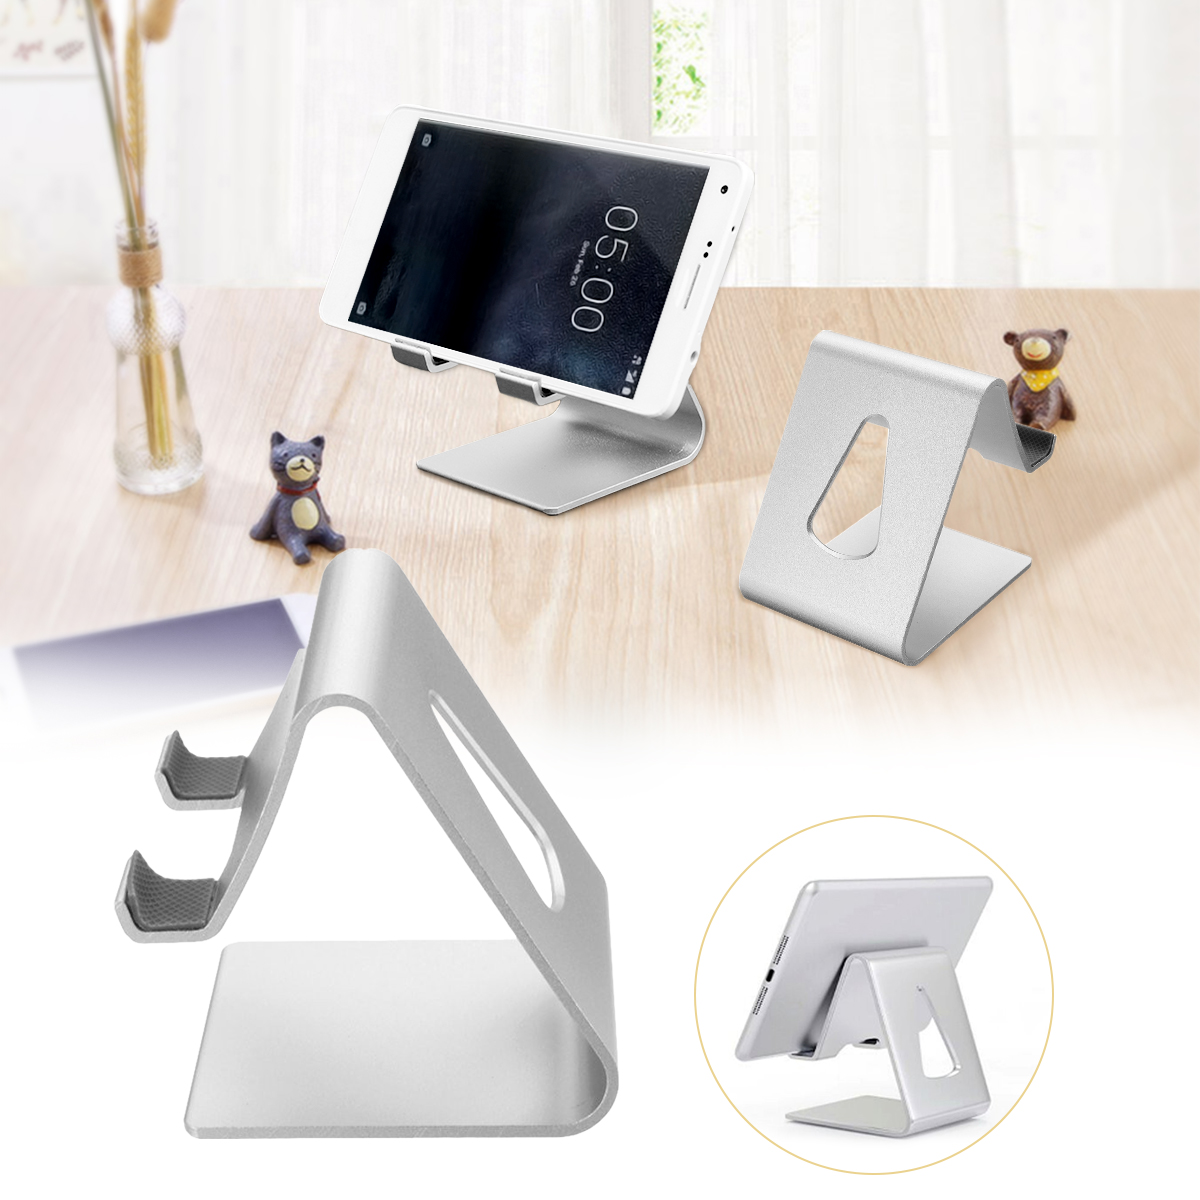 

Universal Aluminium Desktop Phone Stand Lazy Holder Cradle Mount for iPad iPhone Samsung Xiaomi